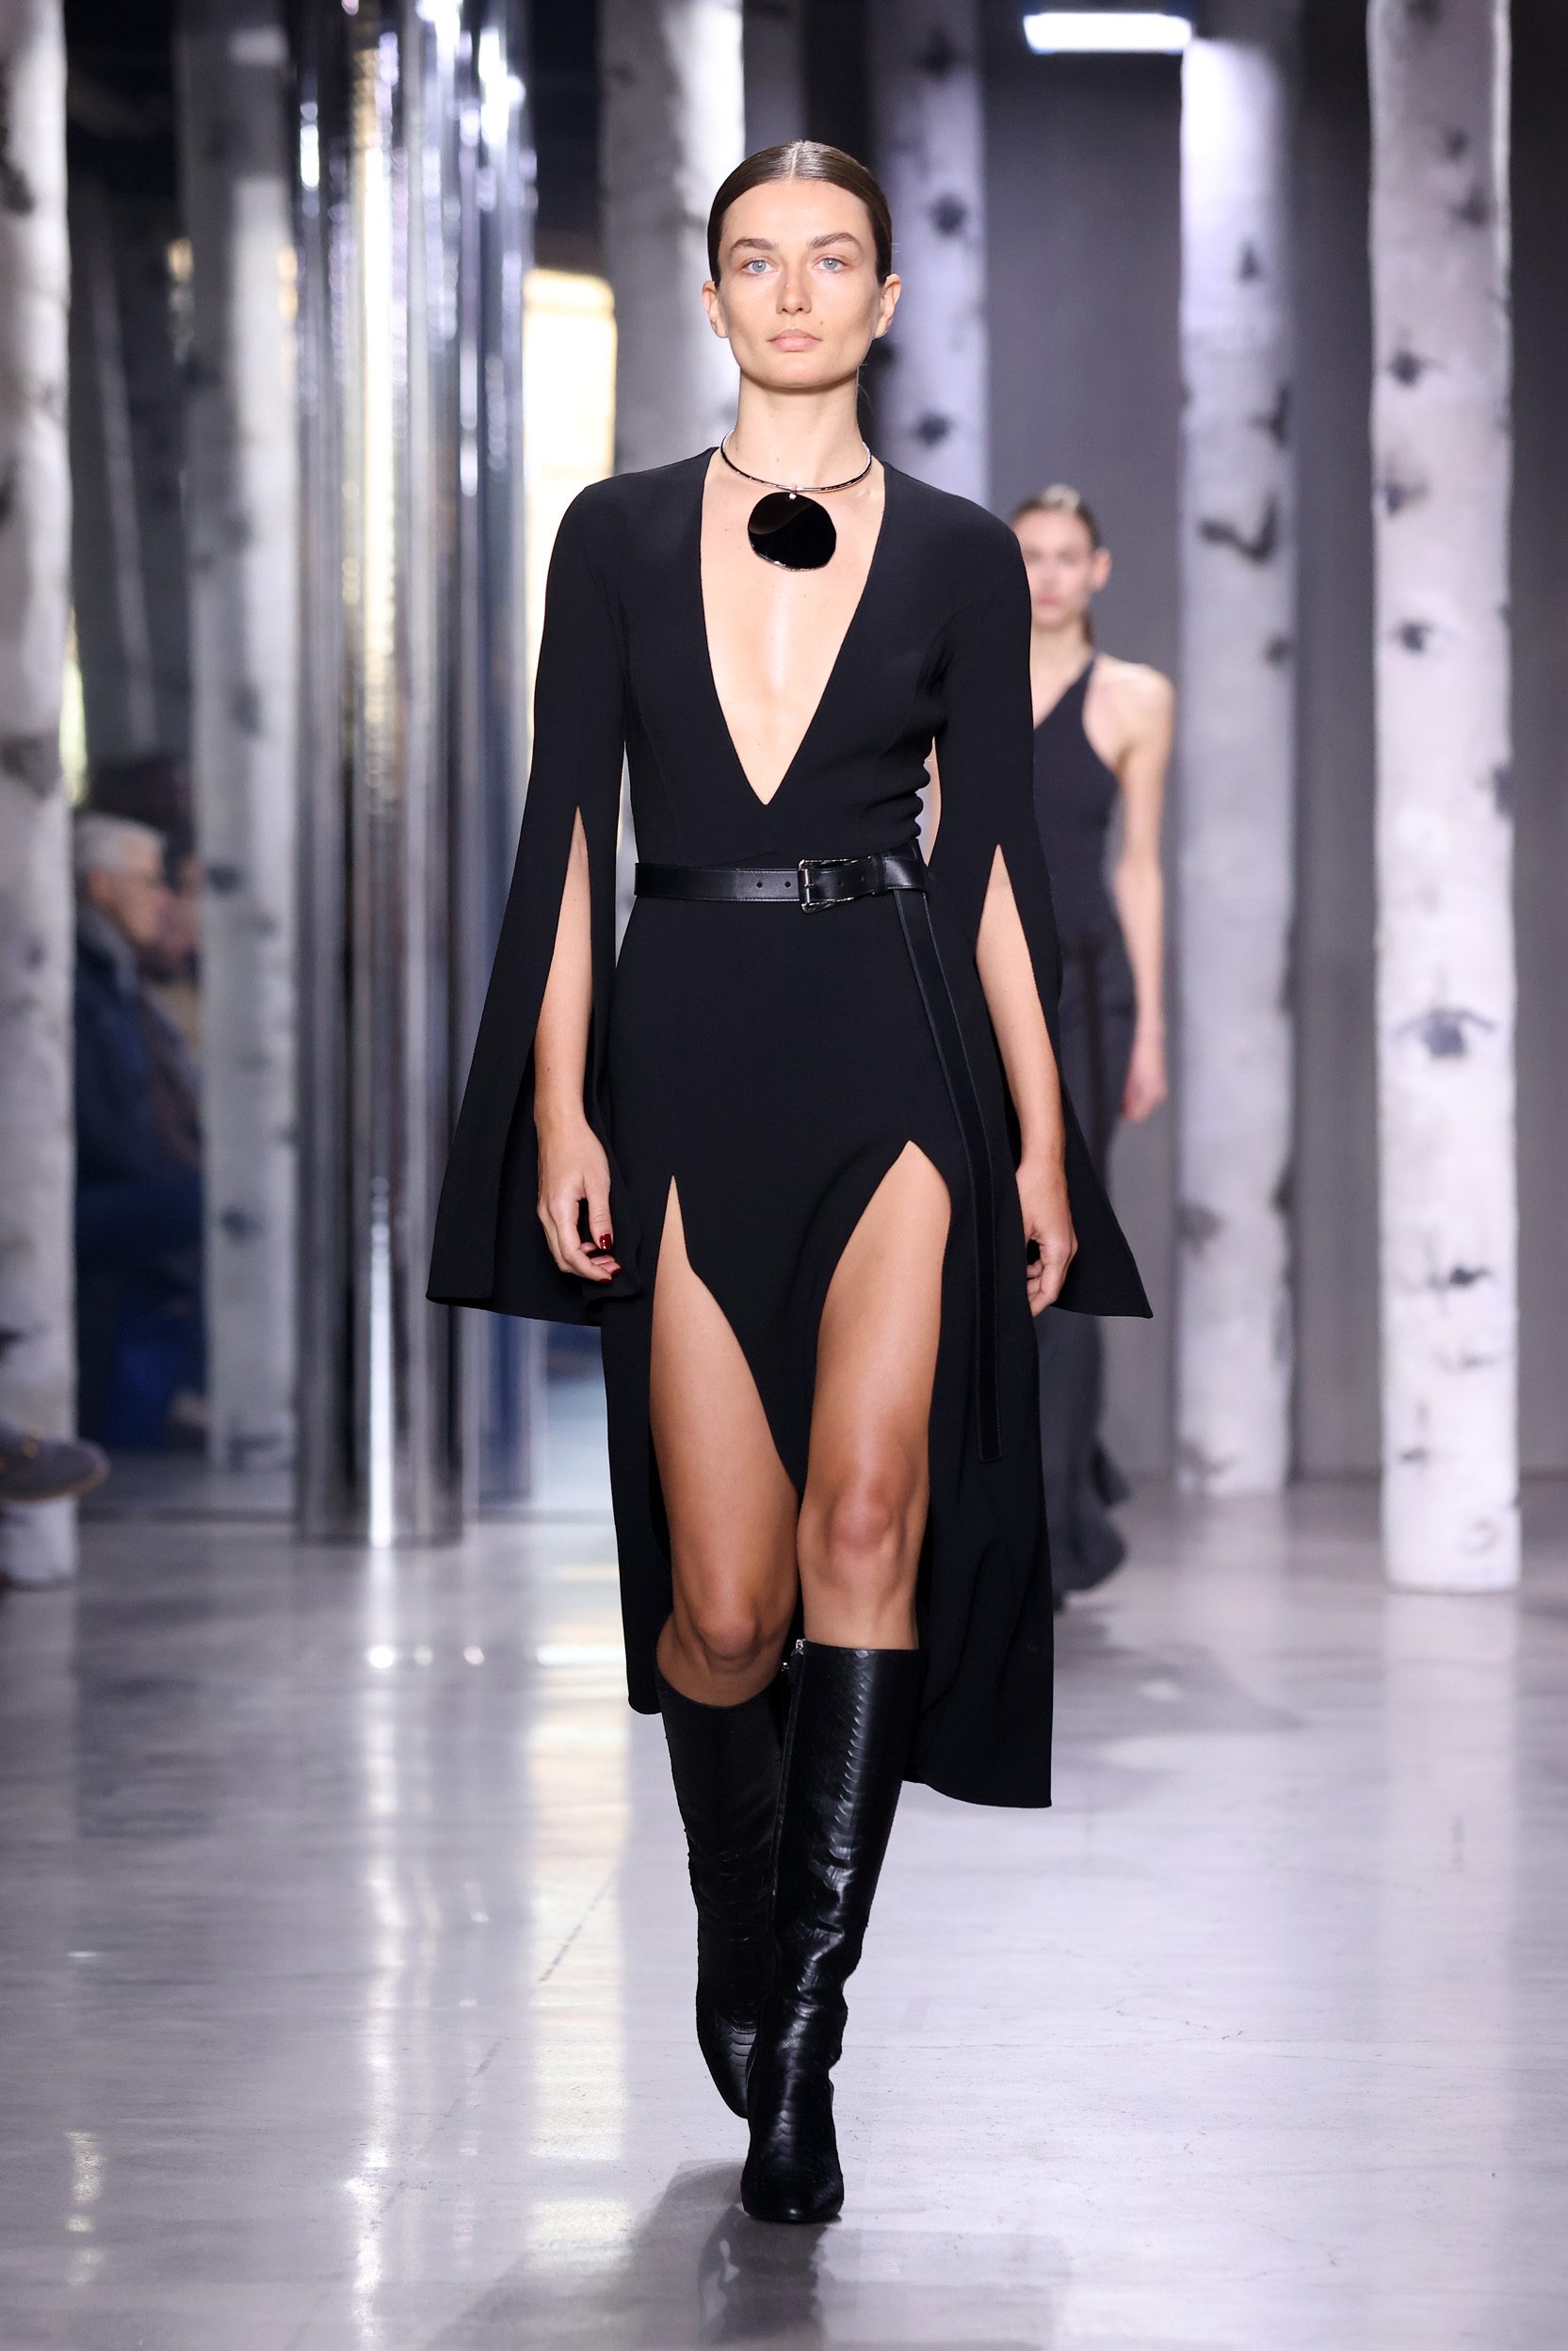 NYFW New York Fashion Week 紐約時裝週 FW23 2023 秋冬系列 時裝展 時裝週 Michael Kors